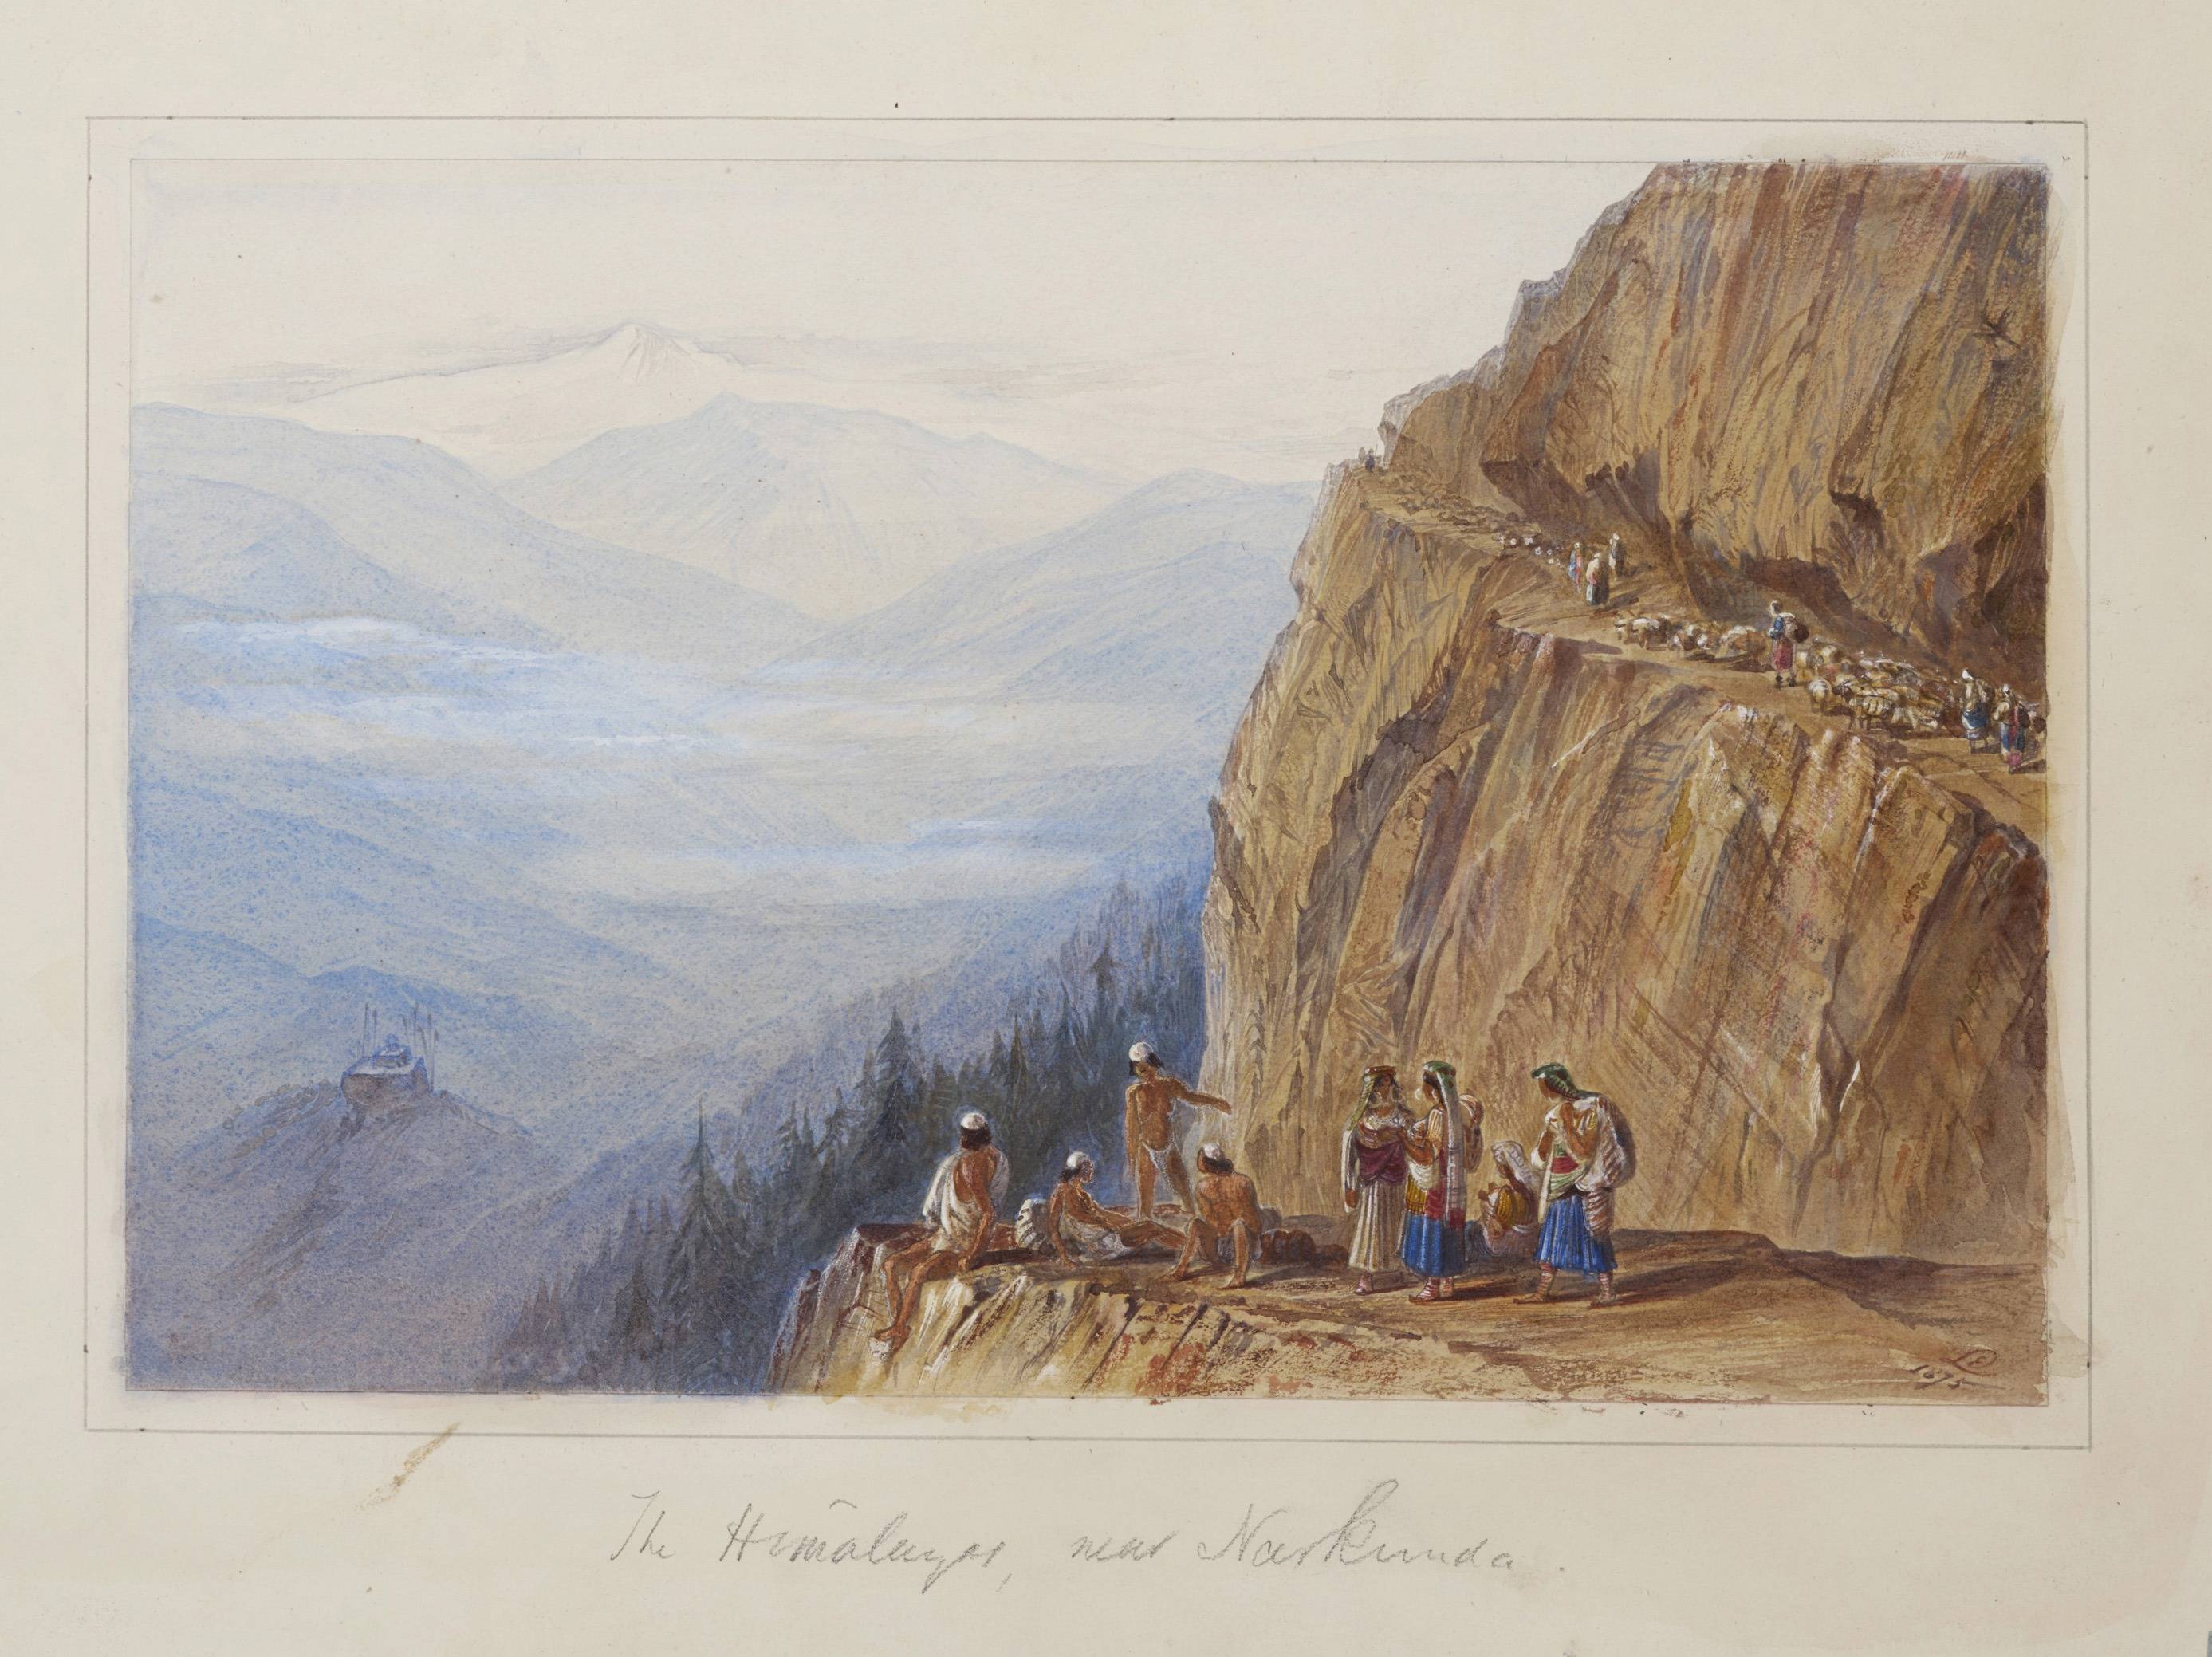 The Himalyas near Nakunda. Edward Lear. 